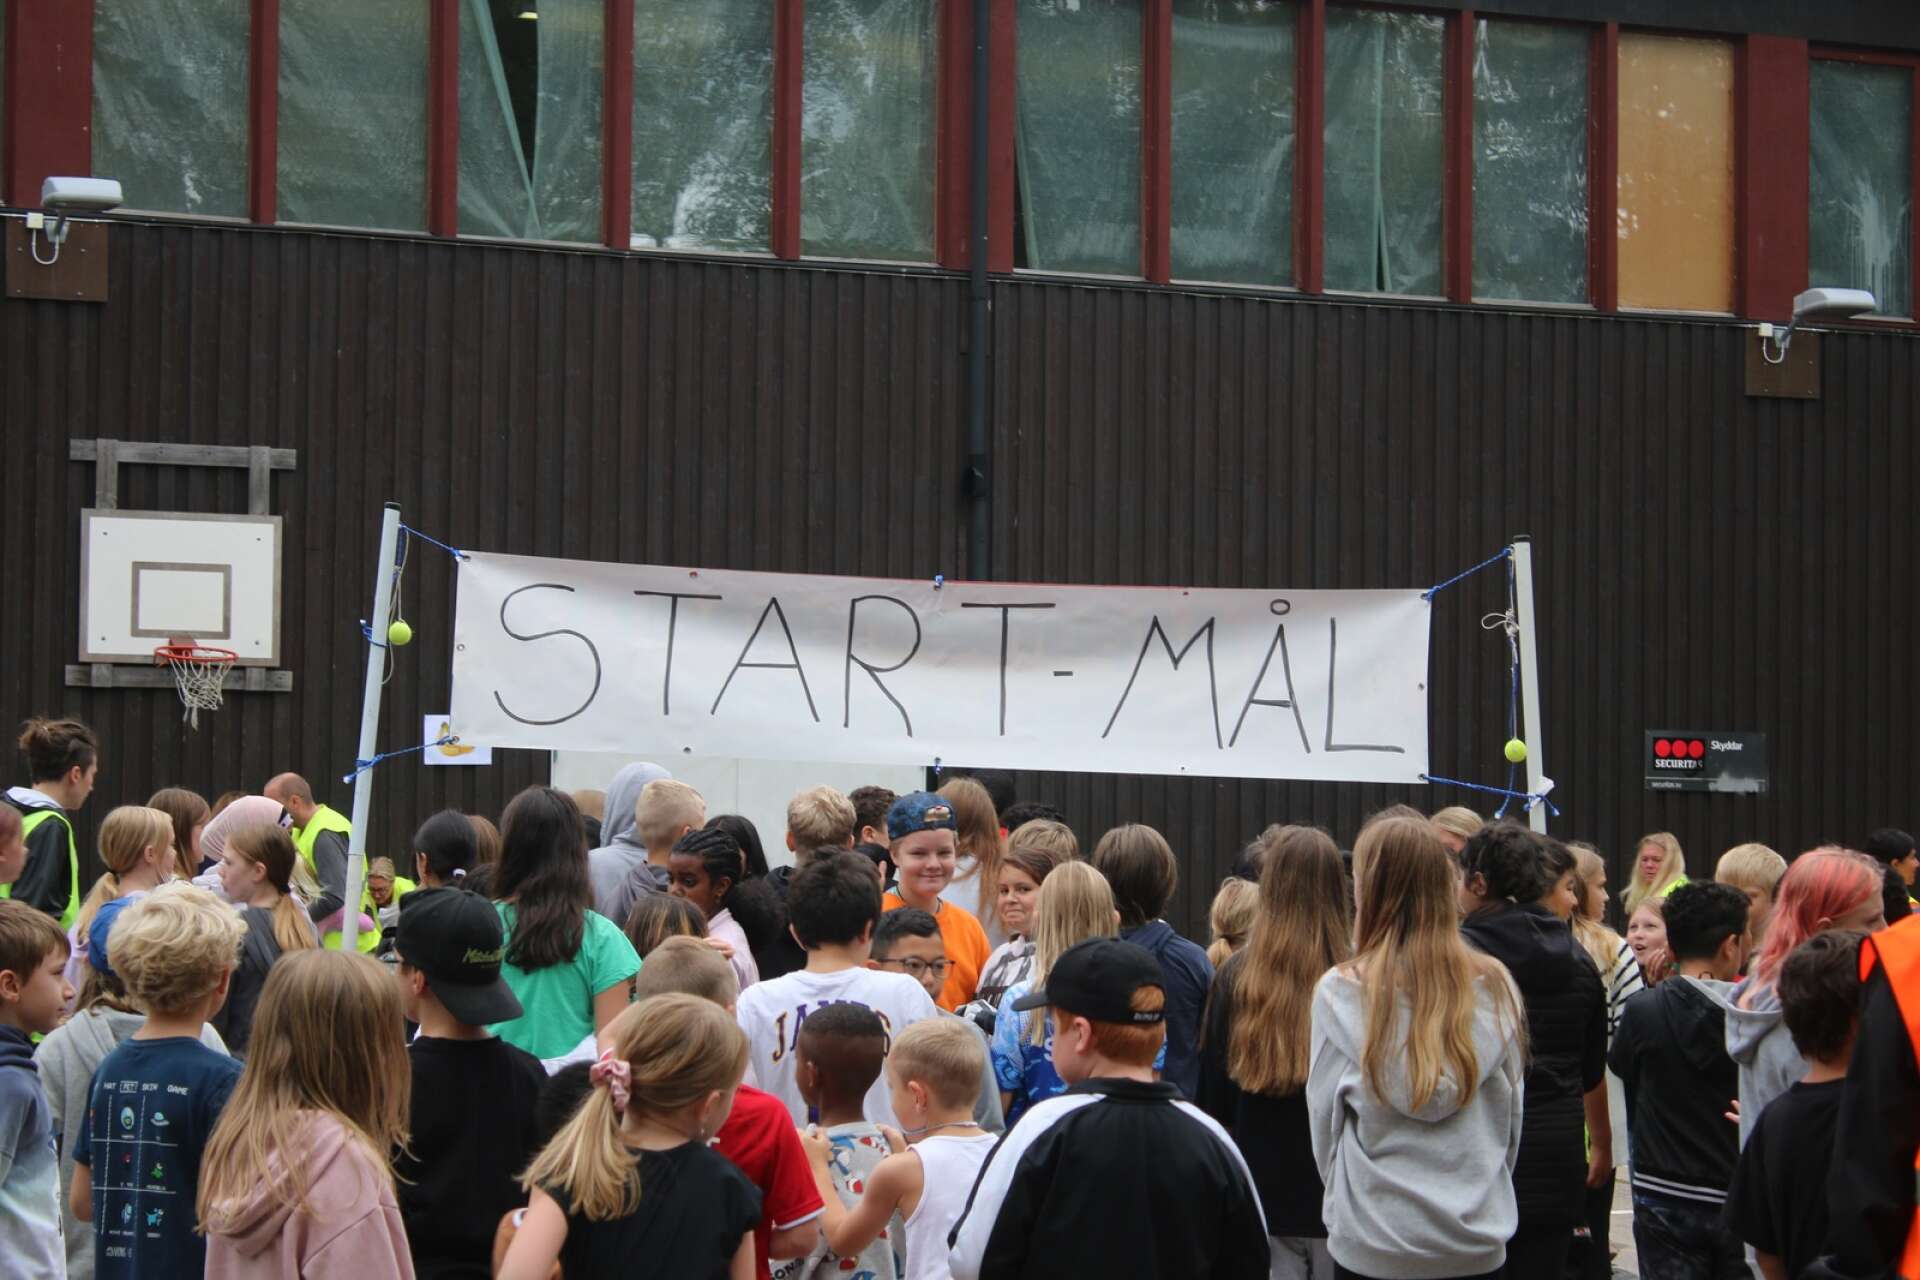 Cirka 300 elever sprang Höglundaloppet